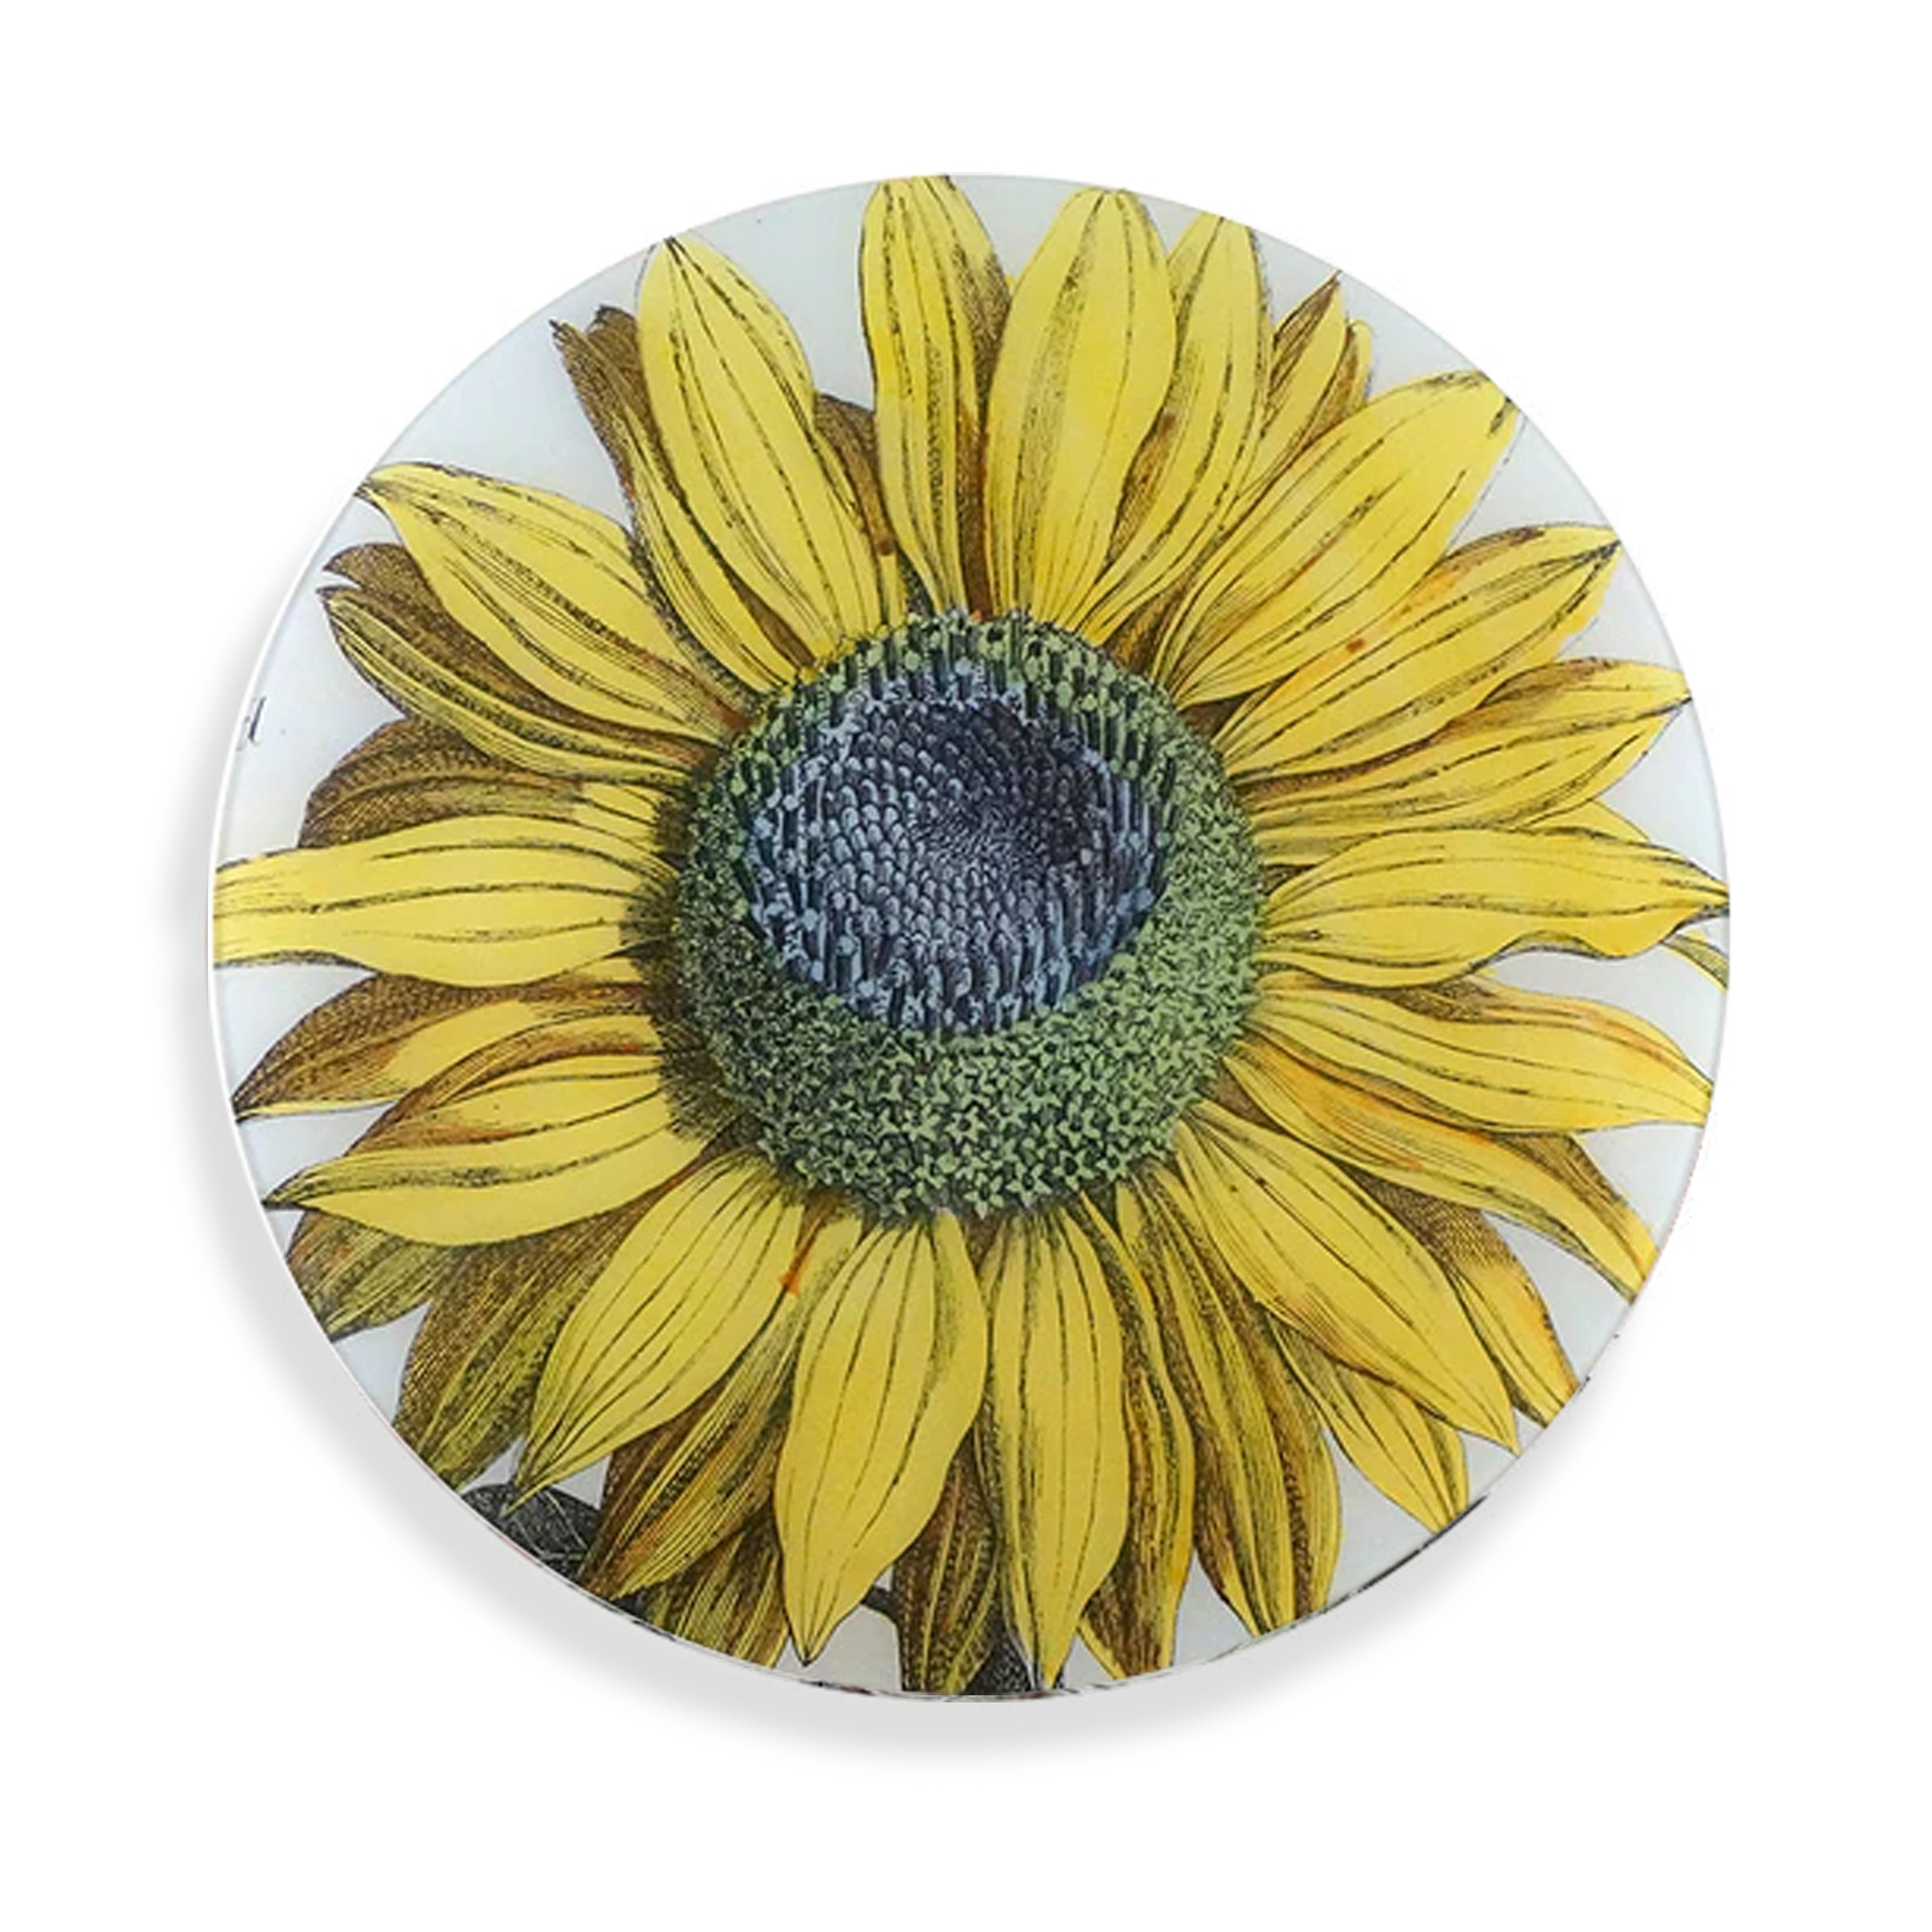 John Derian Sun Flower Round Platter, 40.5cm